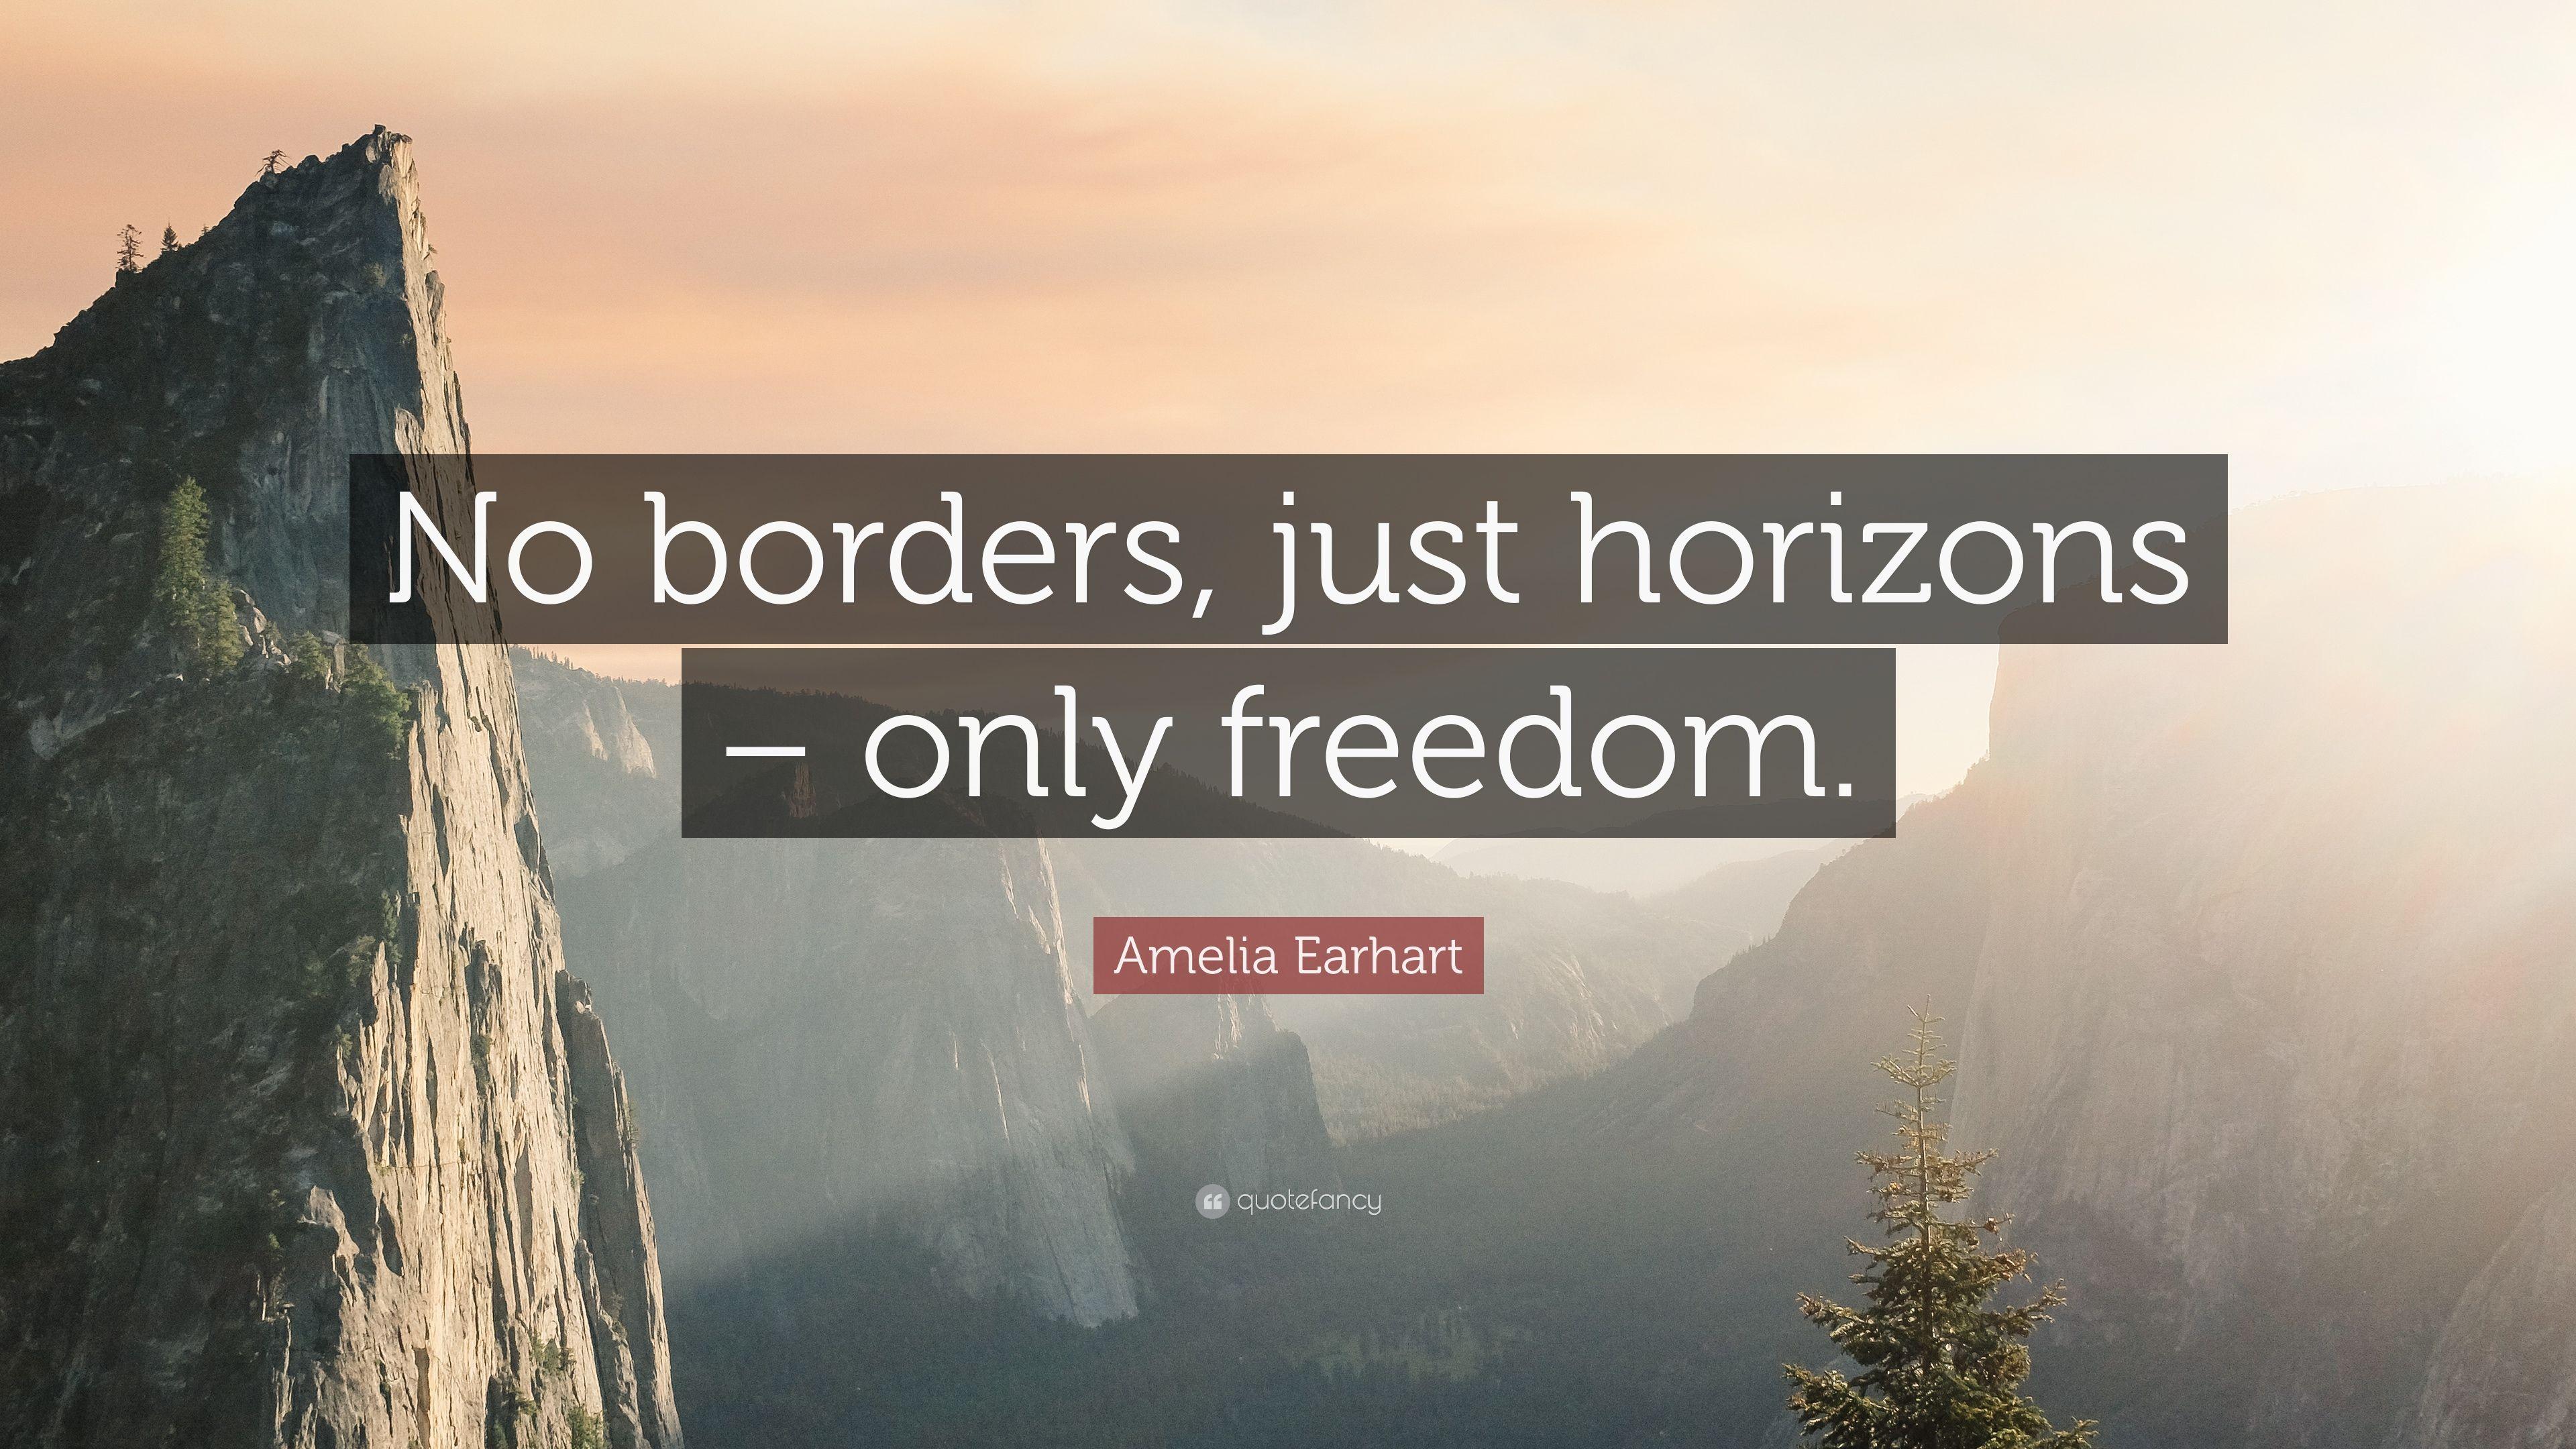 Amelia Earhart Quote: “No borders, just horizons